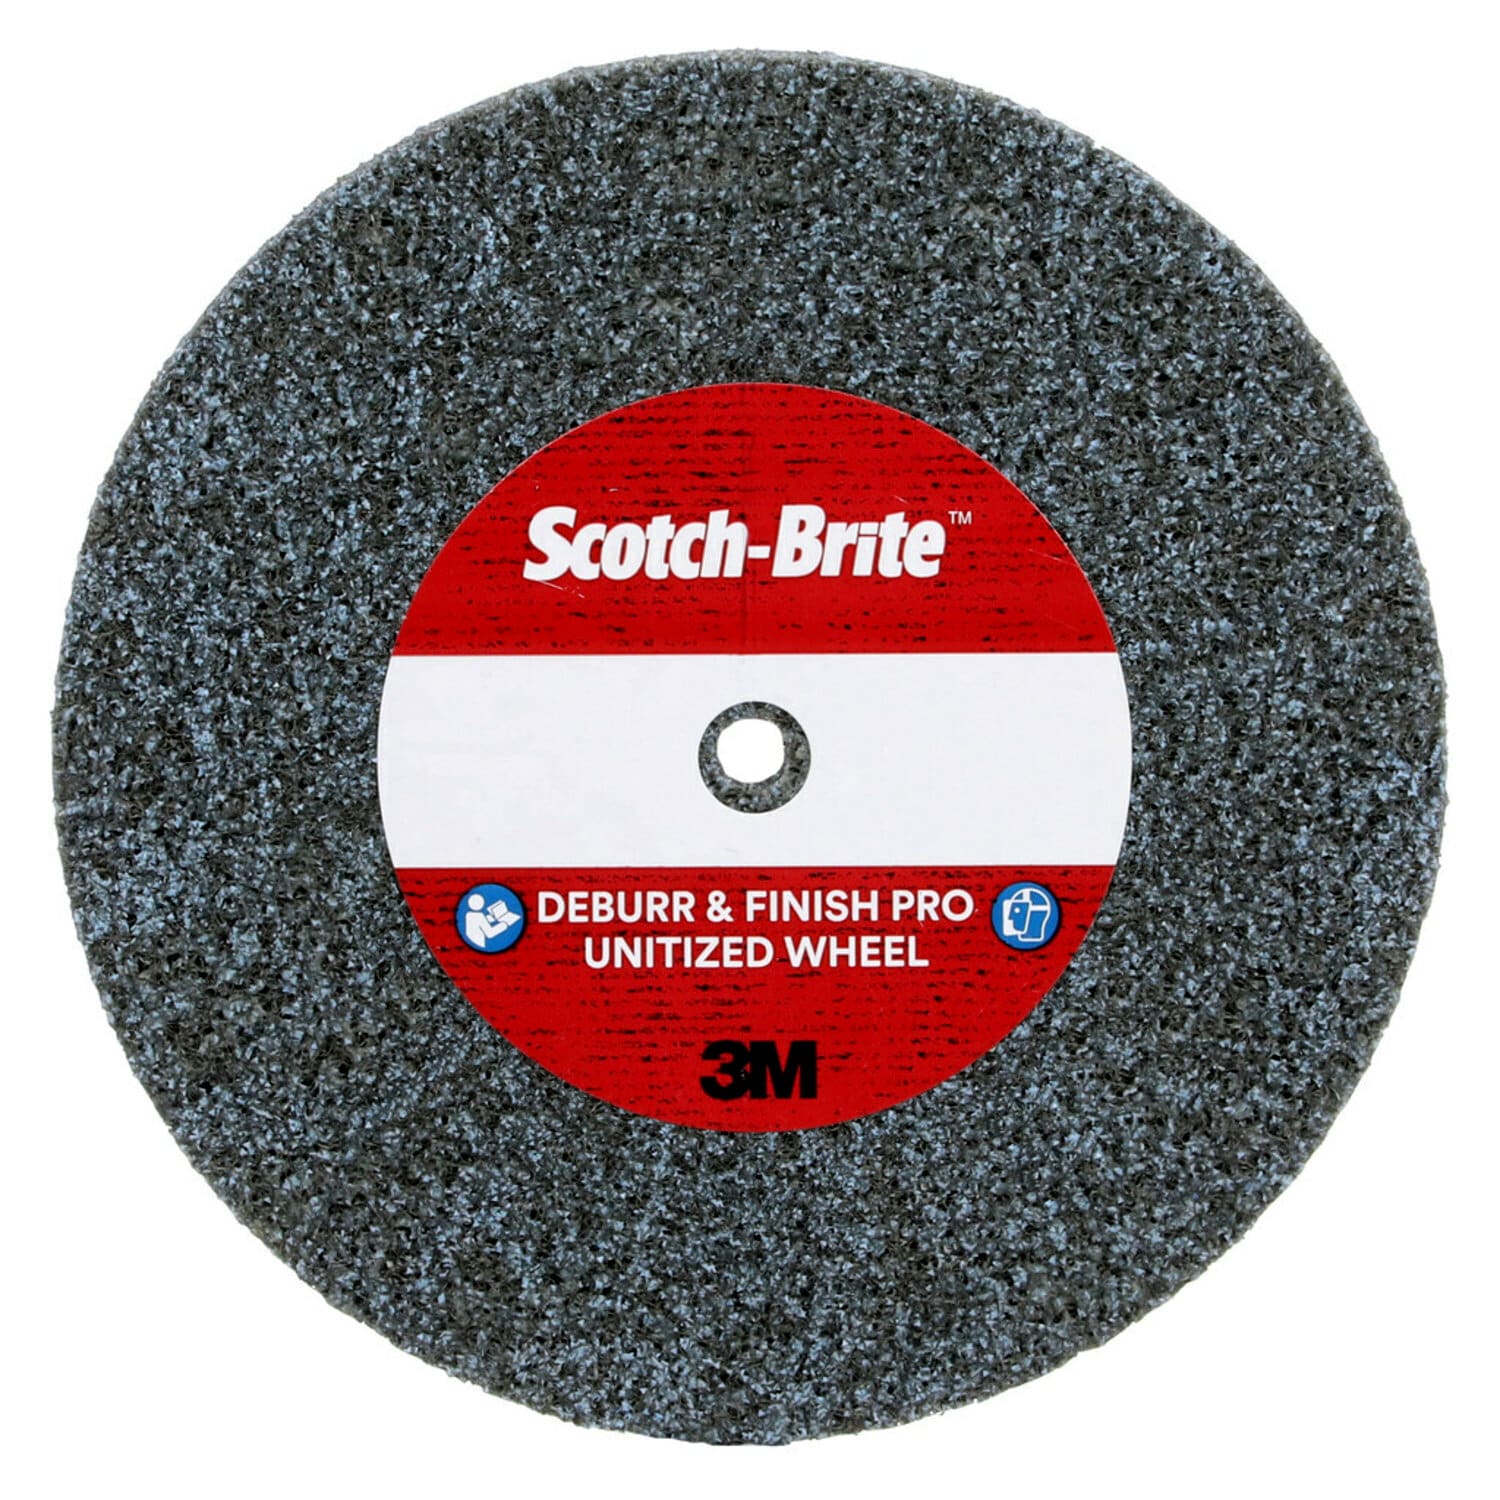 7010534347 - Scotch-Brite Deburr & Finish Pro Unitized Wheel, DP-UW, 8C Coarse+, 3
in x 1/4 in x 3 in